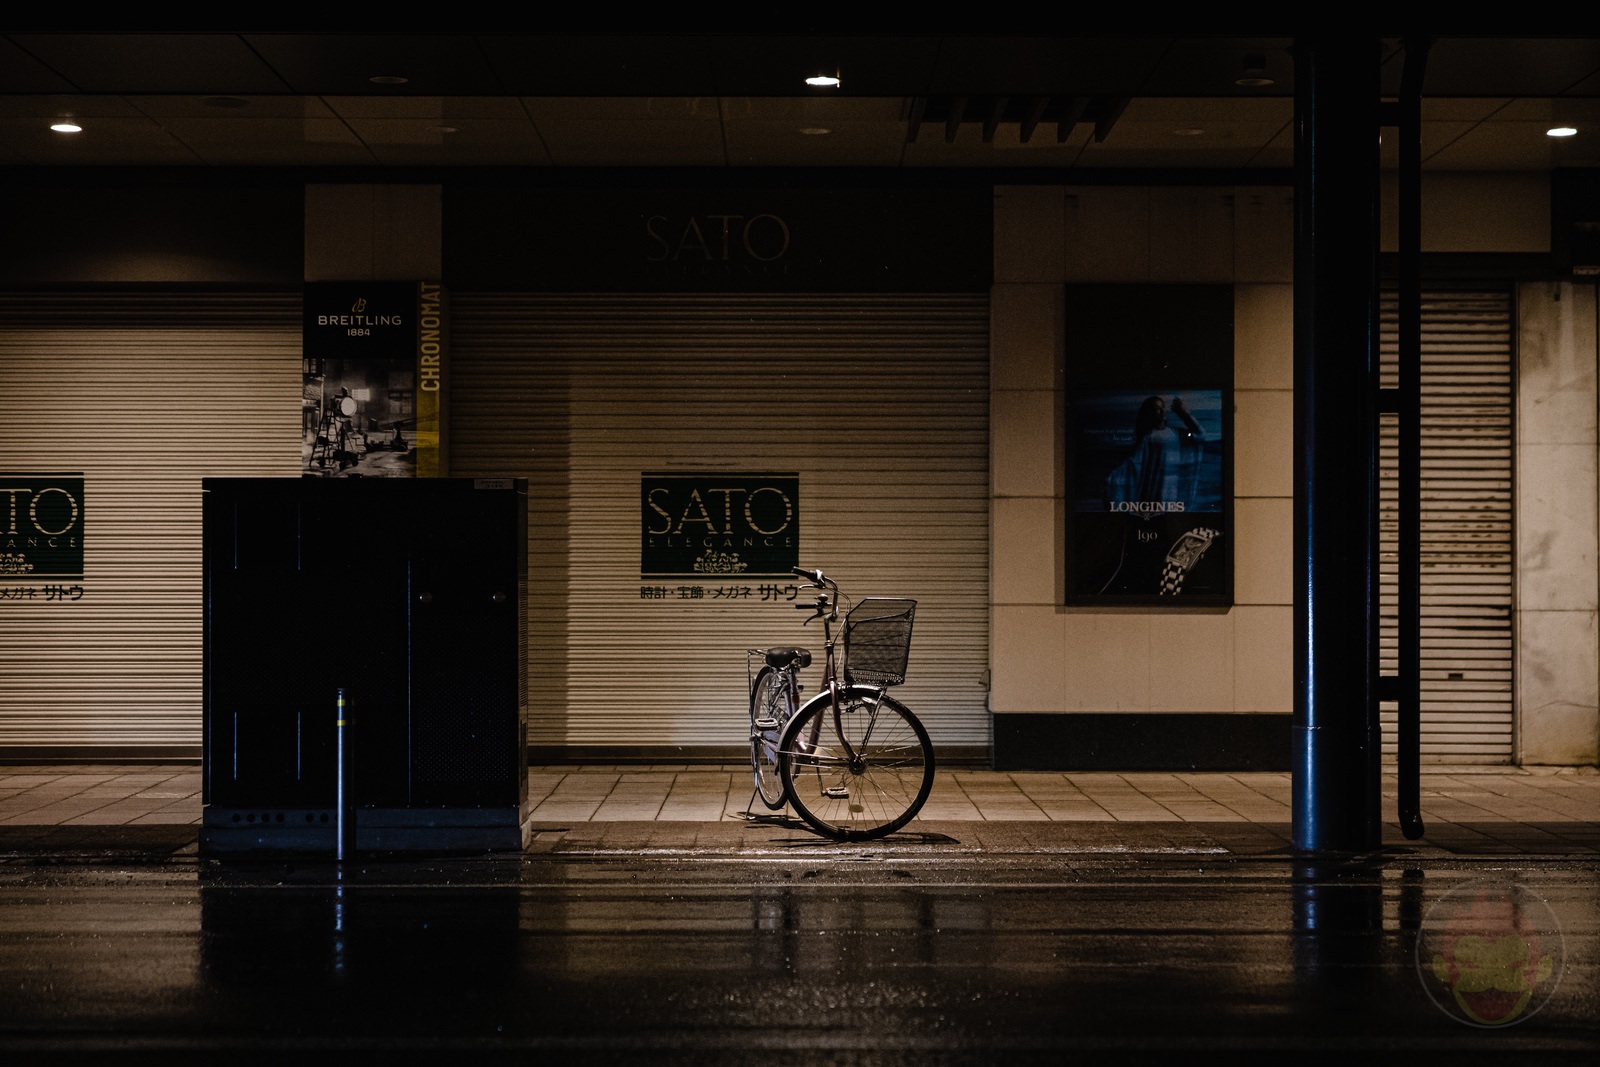 Aizu Wakamatsu night in the rain street photography 01